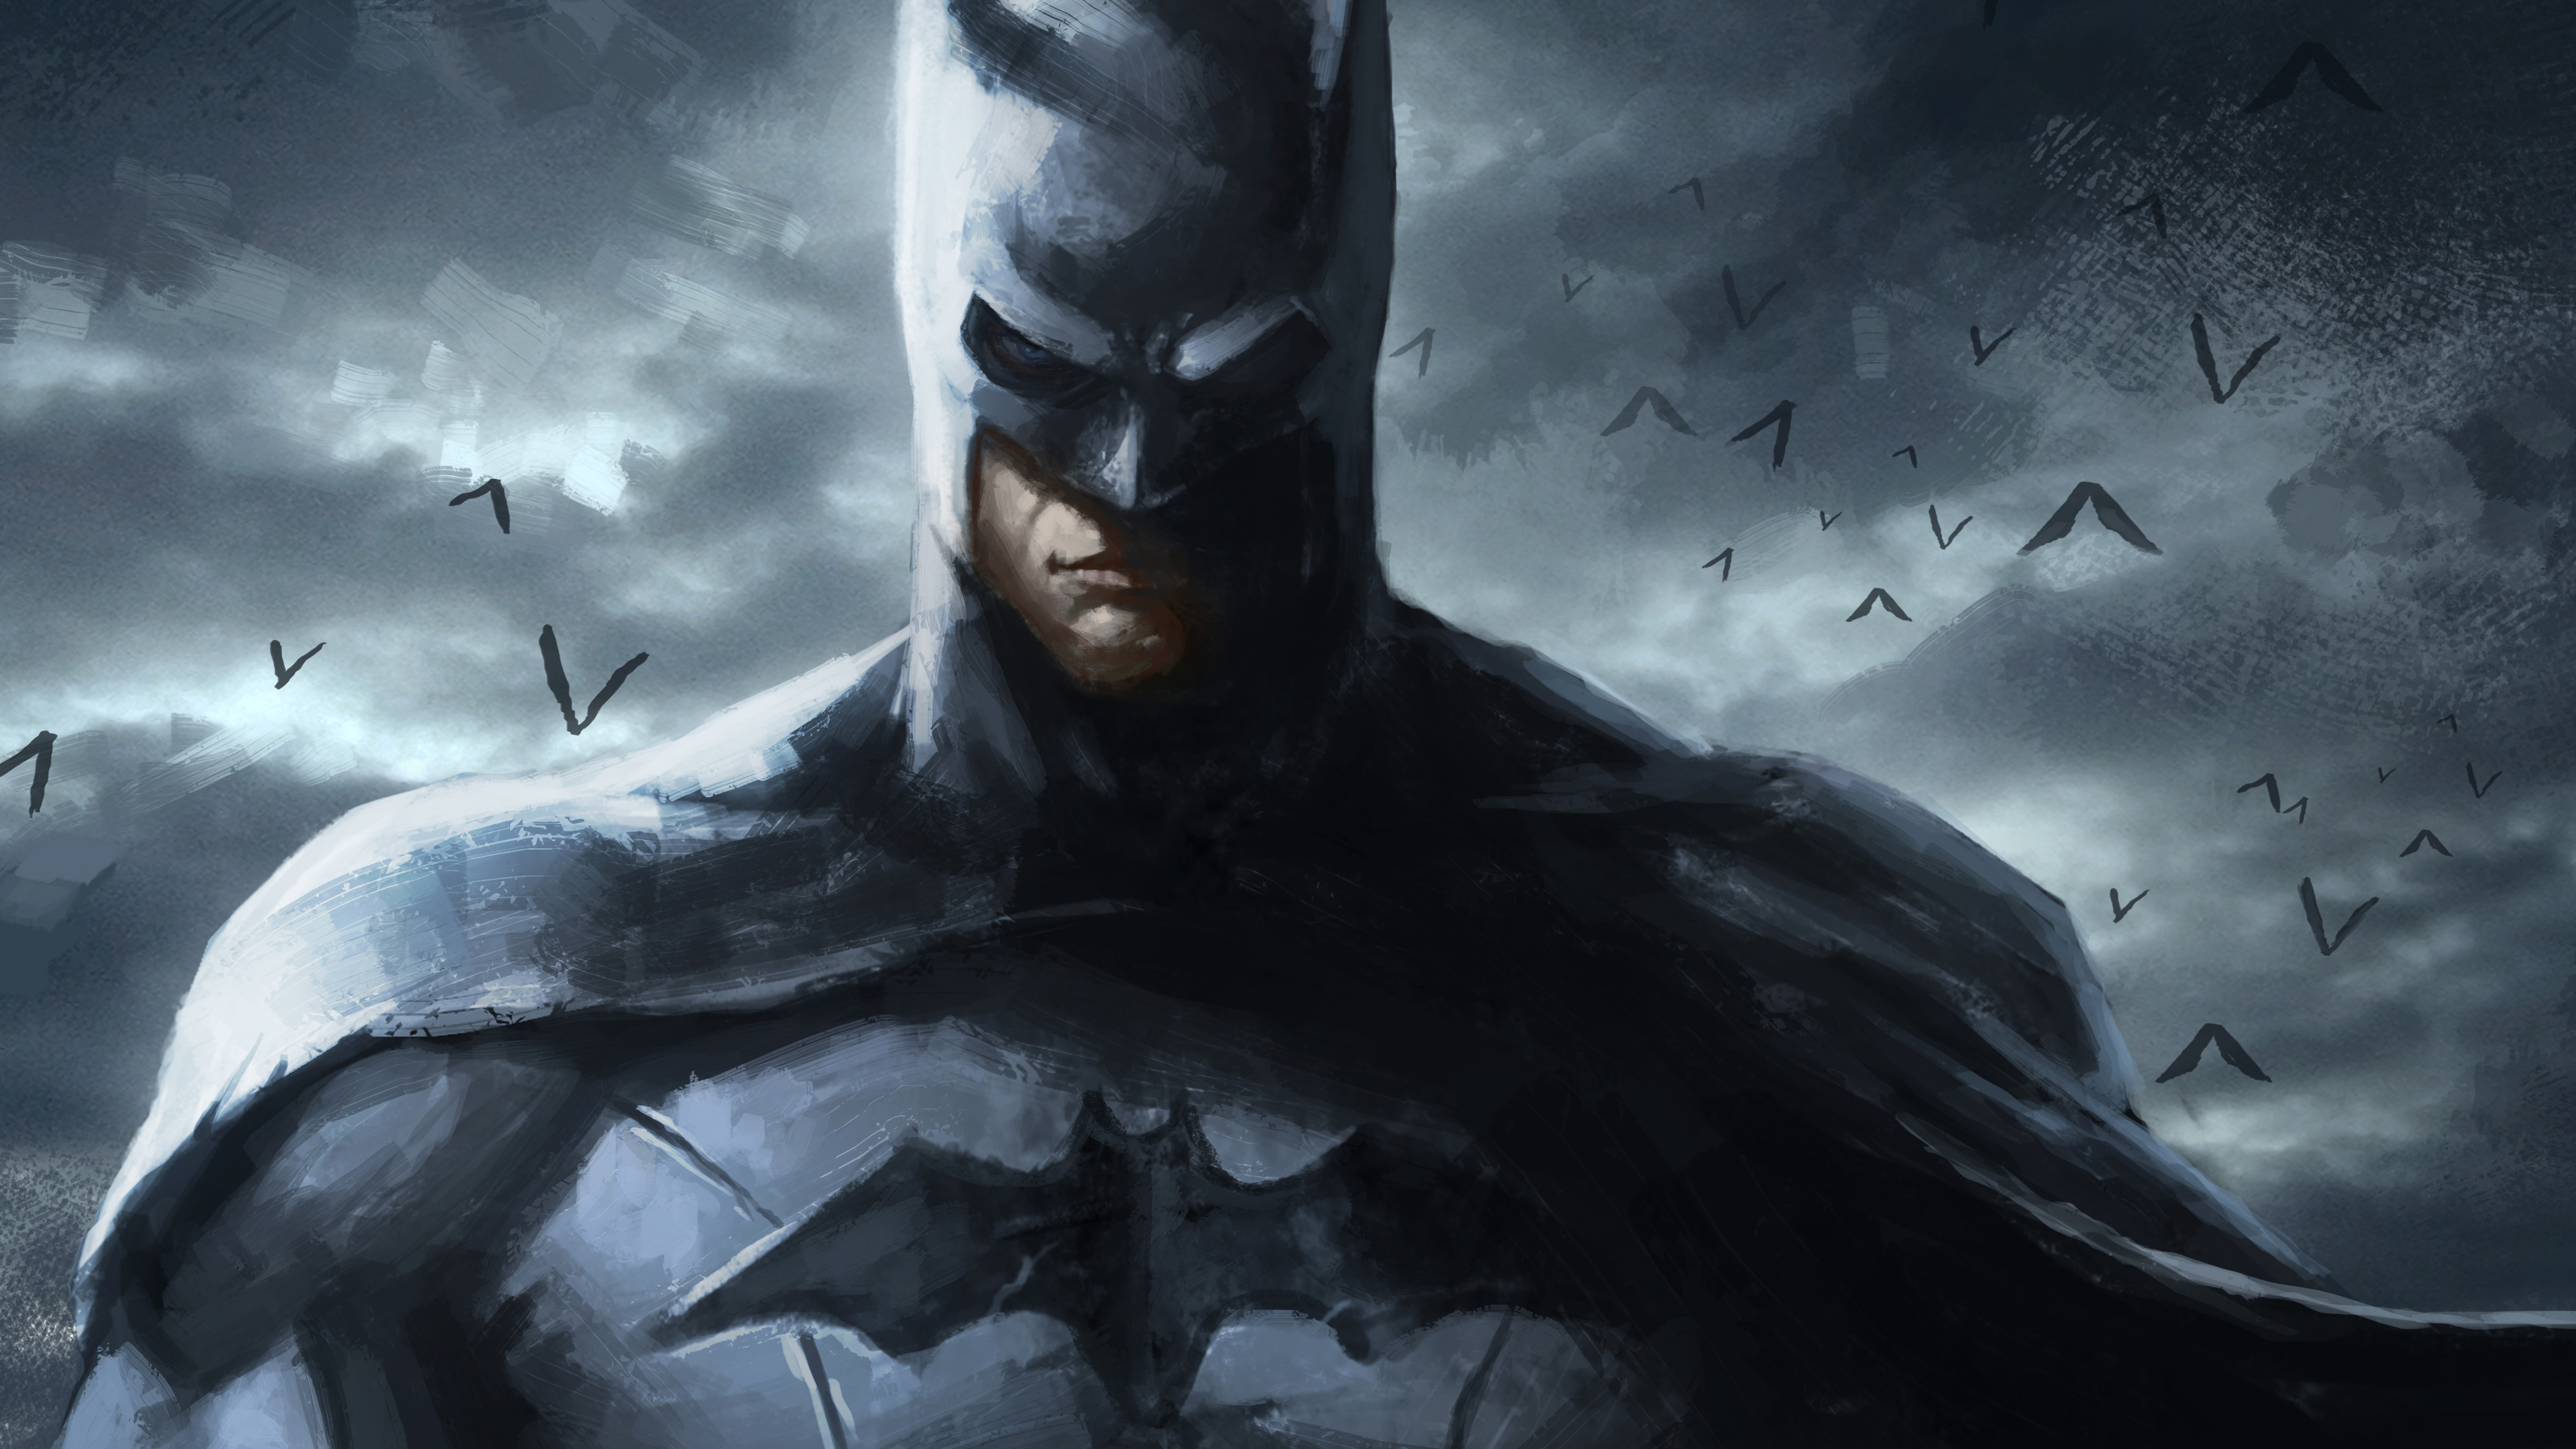  Batman  Art 4k  HD Superheroes 4k  Wallpapers  Images 